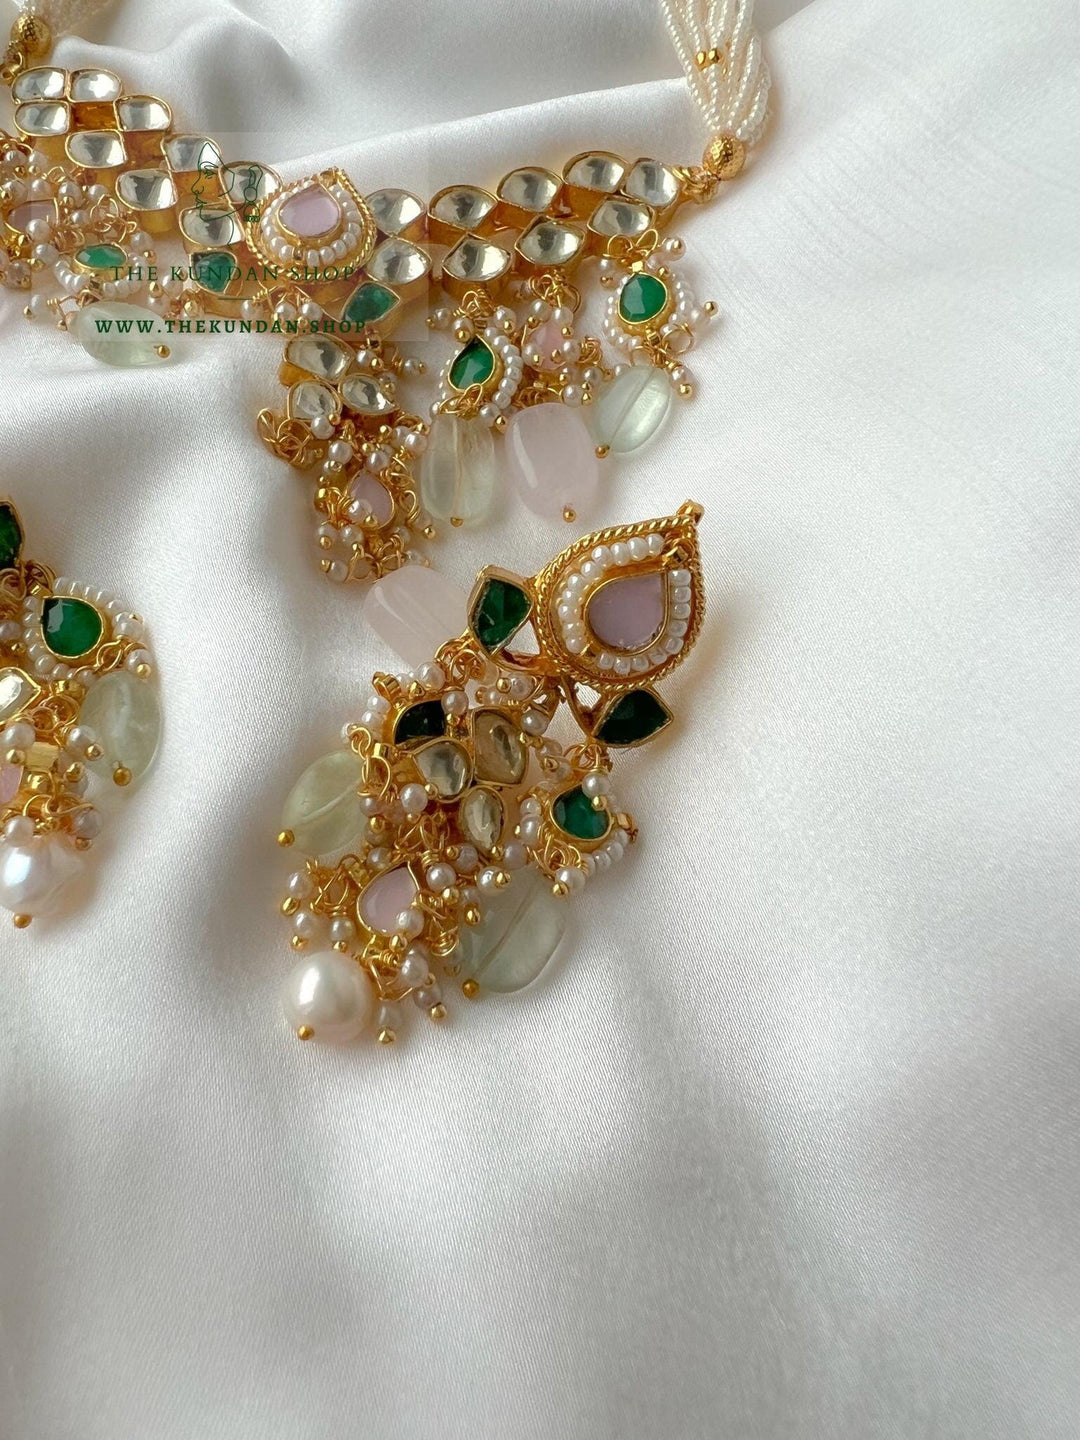 Sensation in Emerald & Pink Necklace Sets THE KUNDAN SHOP 